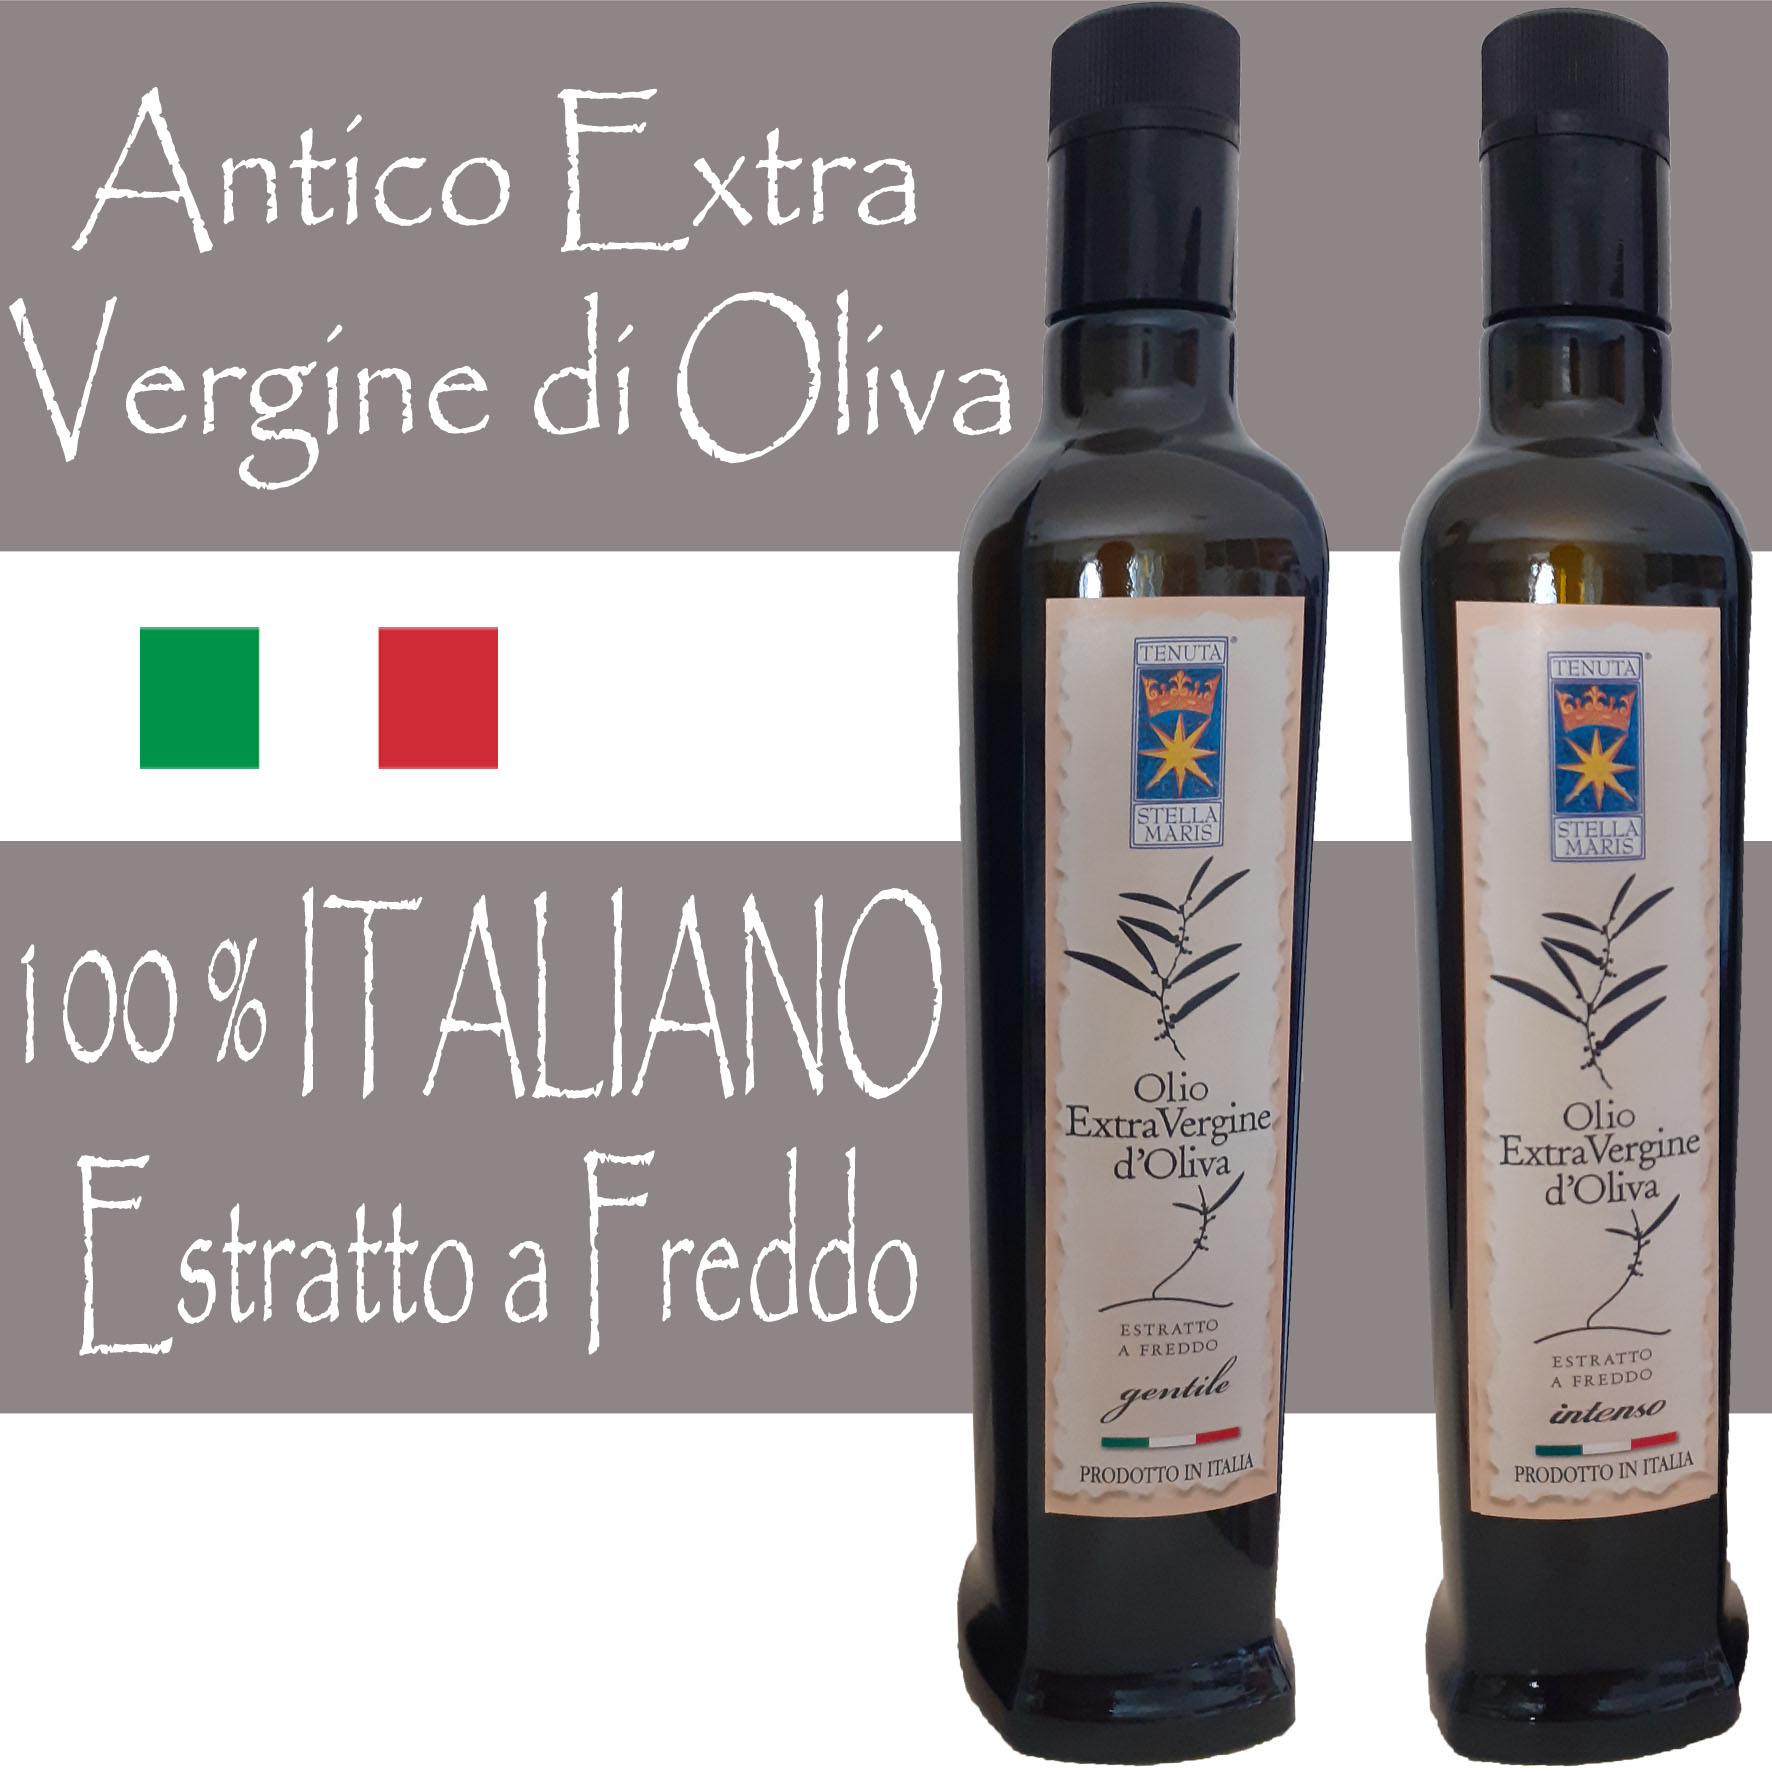 ANTICO Extra Vergine di Oliva - BOTTIGLIE/BOTTLES/FLASCHEN 75 cl. - Confezioni da 12 Bottiglie